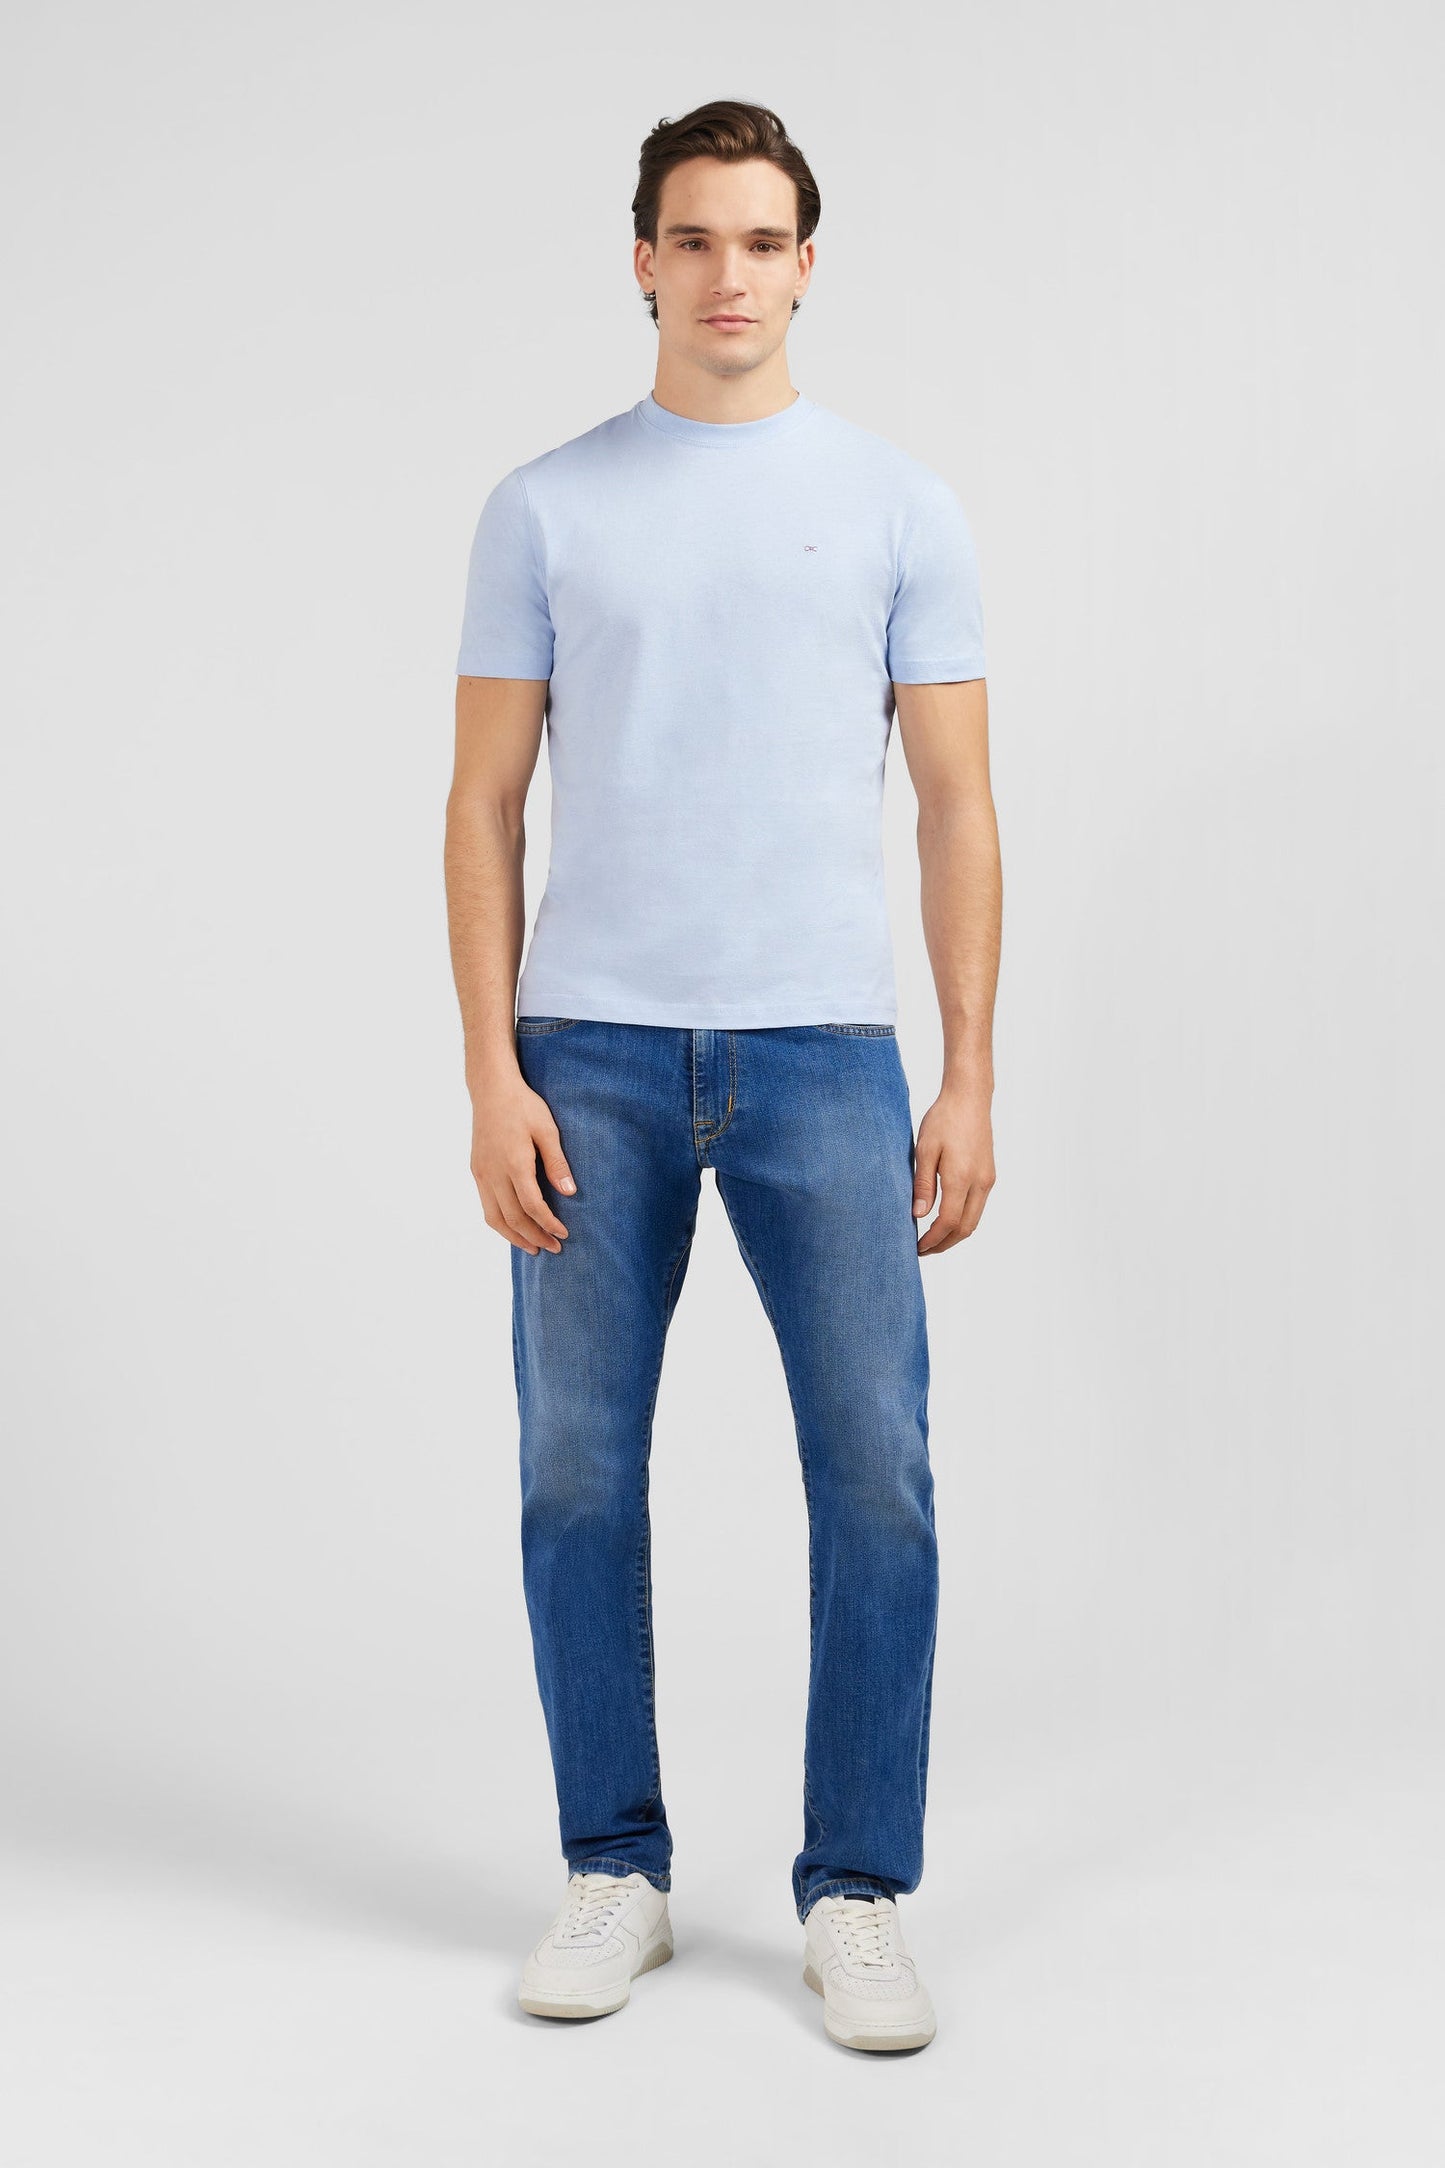 T-shirt manches courtes bleu clair - Image 1